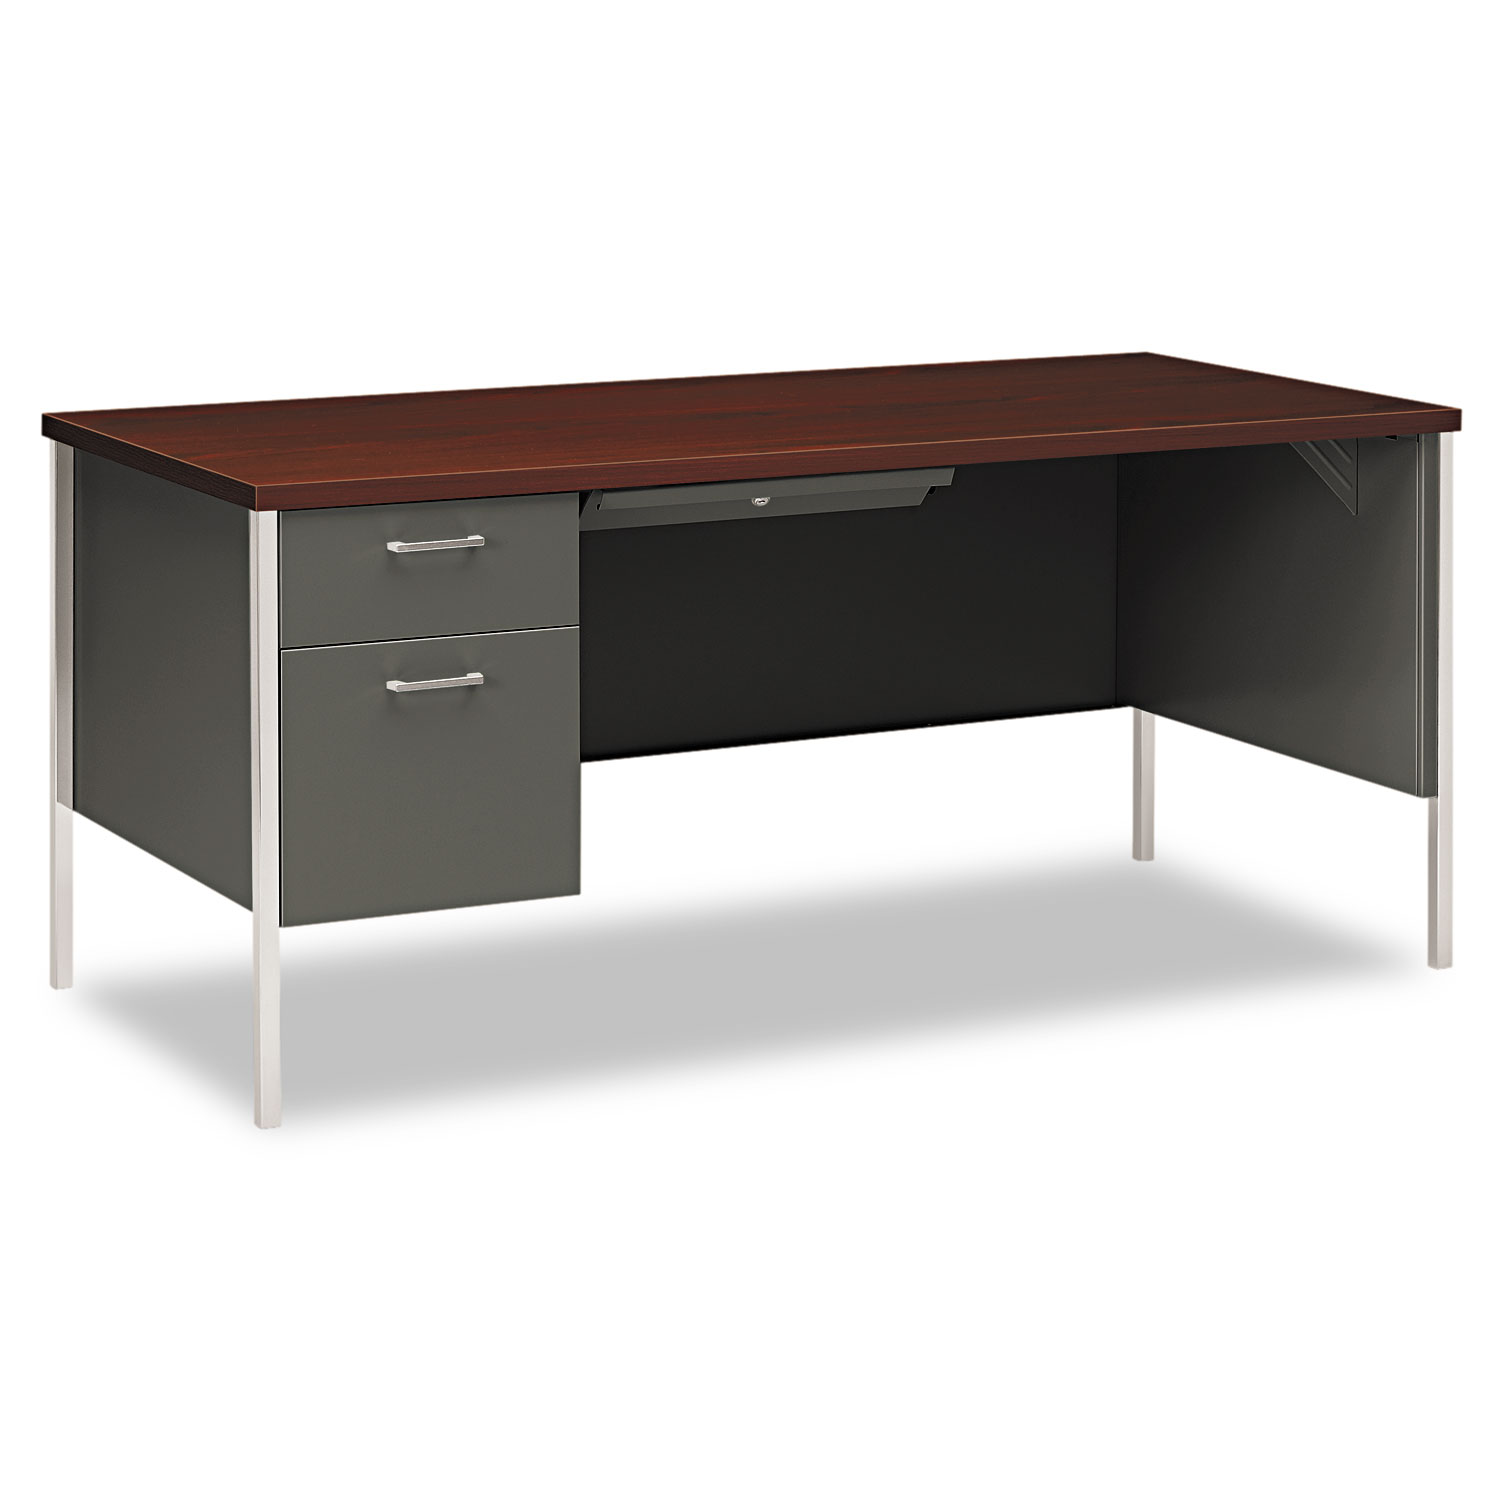  HON H34974L.N.S 34000 Series Left Pedestal Desk, 66w x 30d x 29.5h, Mahogany/Charcoal (HON34974LNS) 